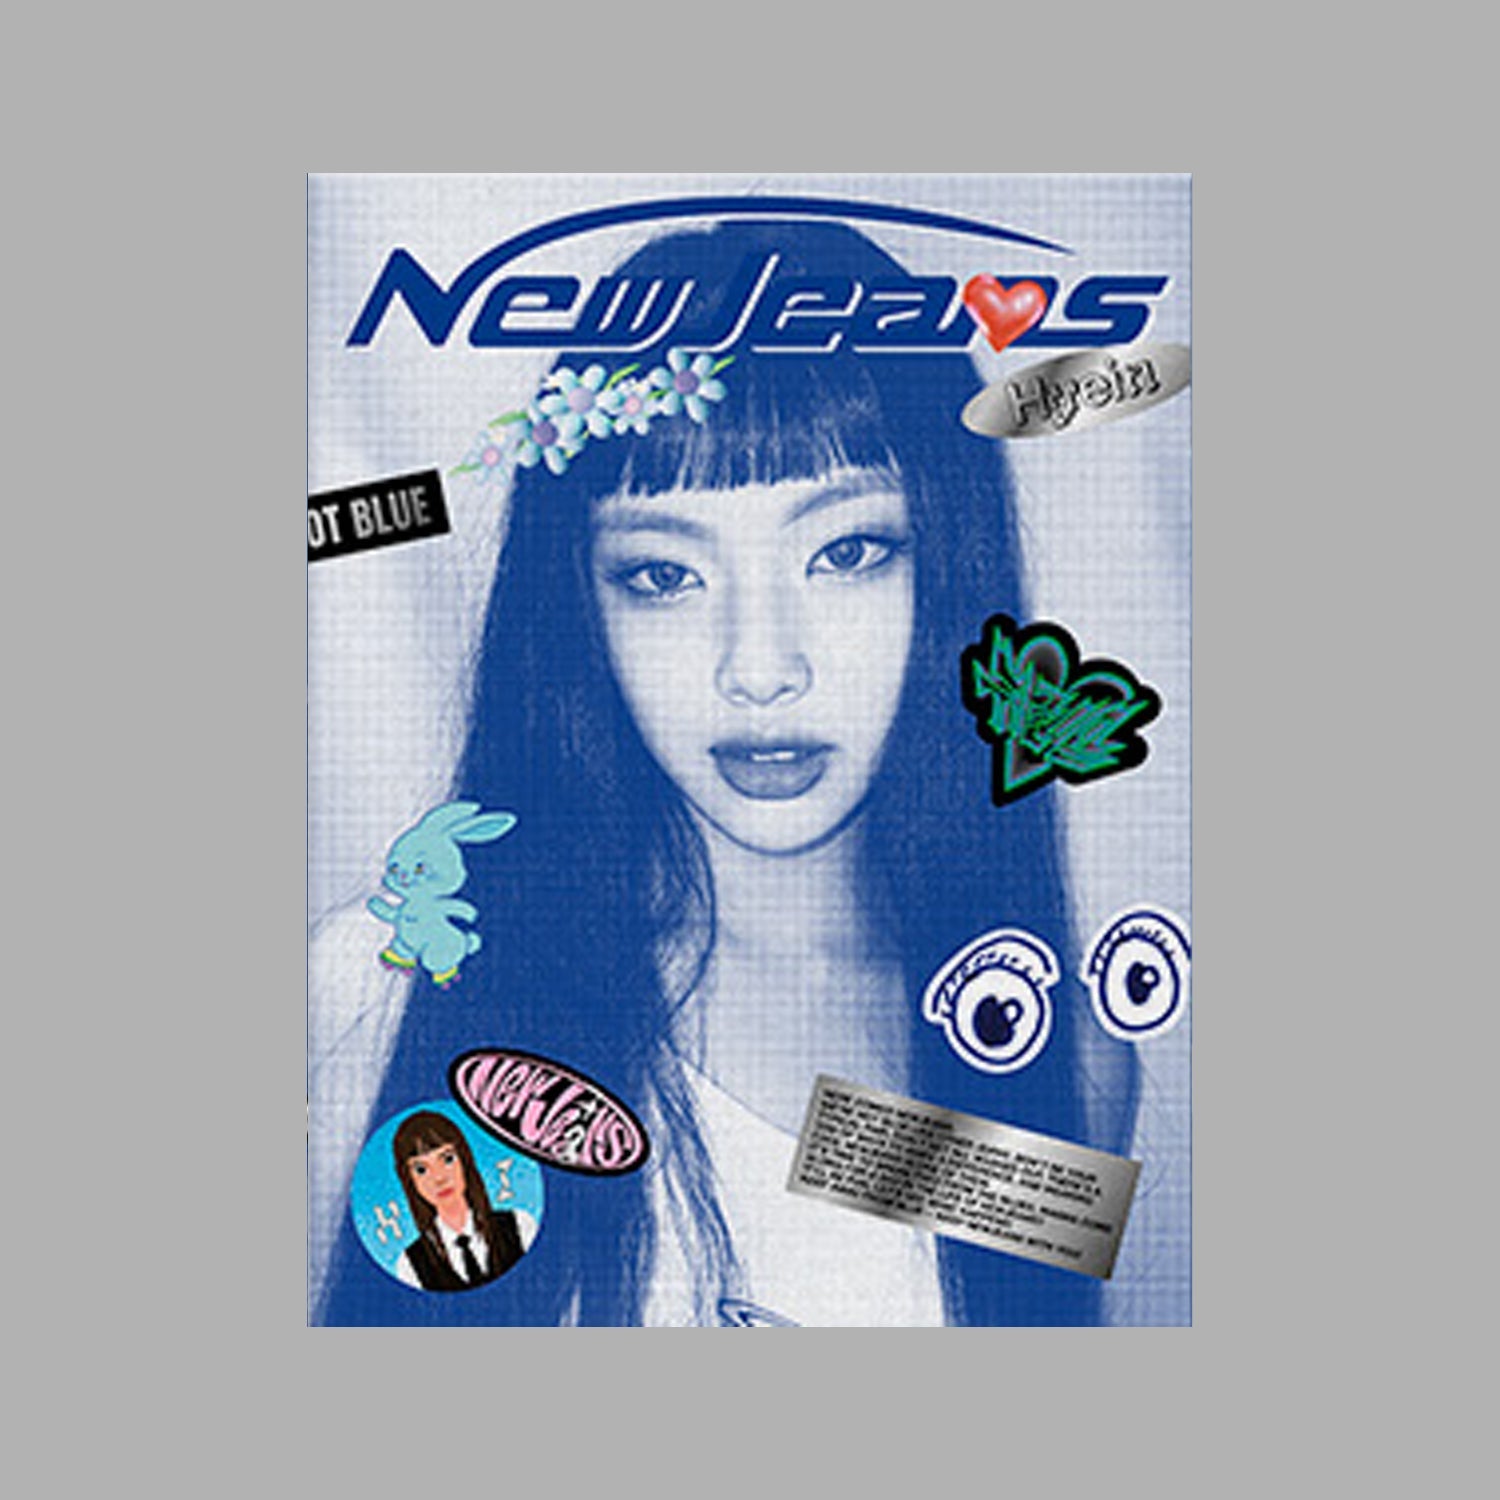 NEWJEANS 1ST EP ALBUM 'NEW JEANS' (BLUEBOOK) HYEIN VERSION COVER